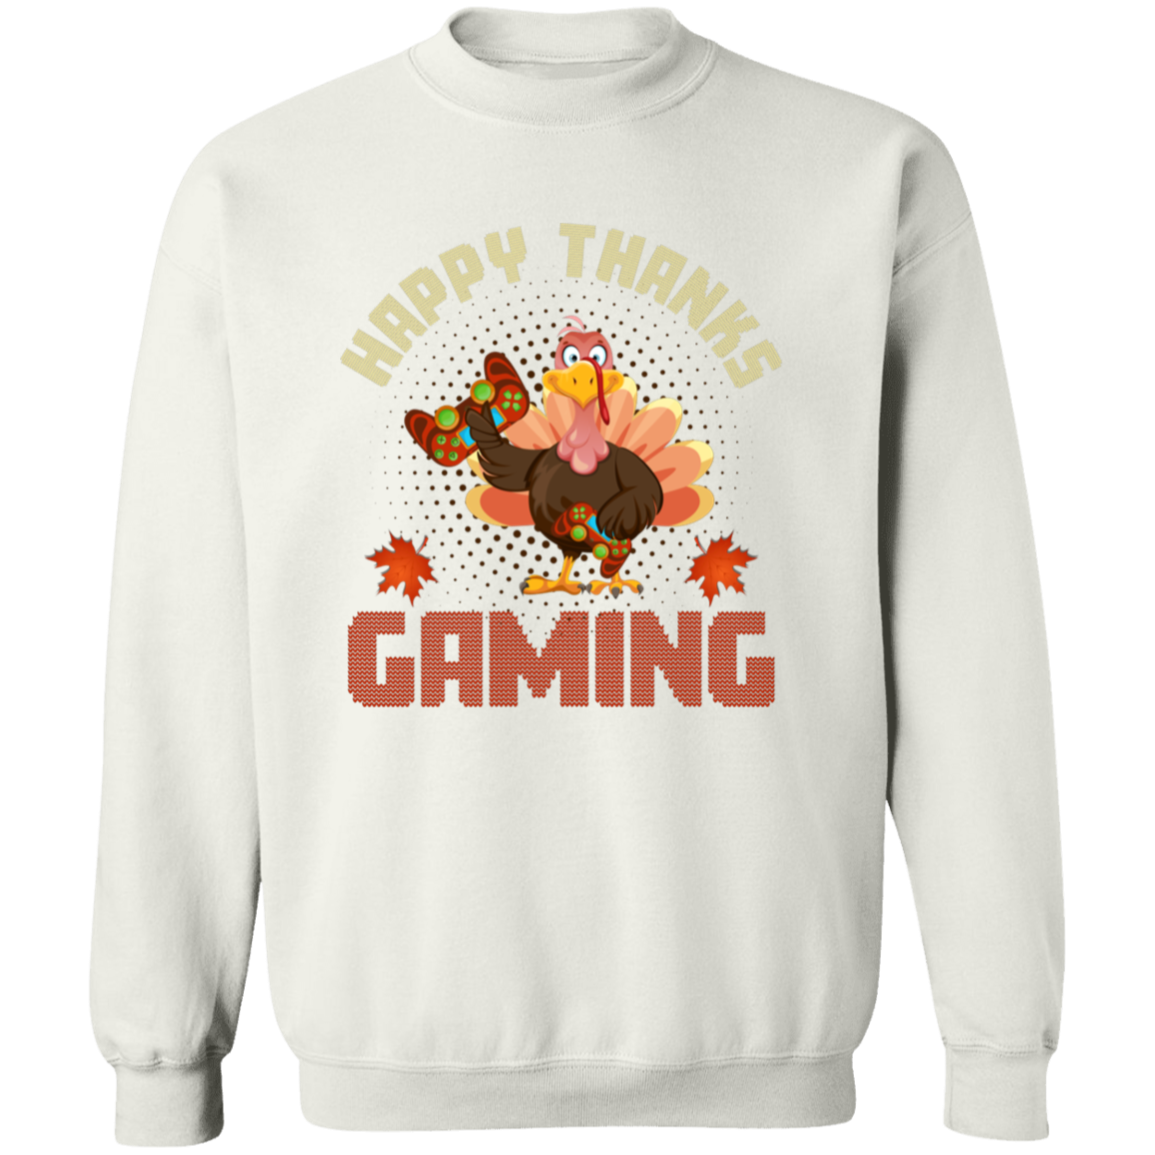 Happy Thanks Gaming Sweatshirt